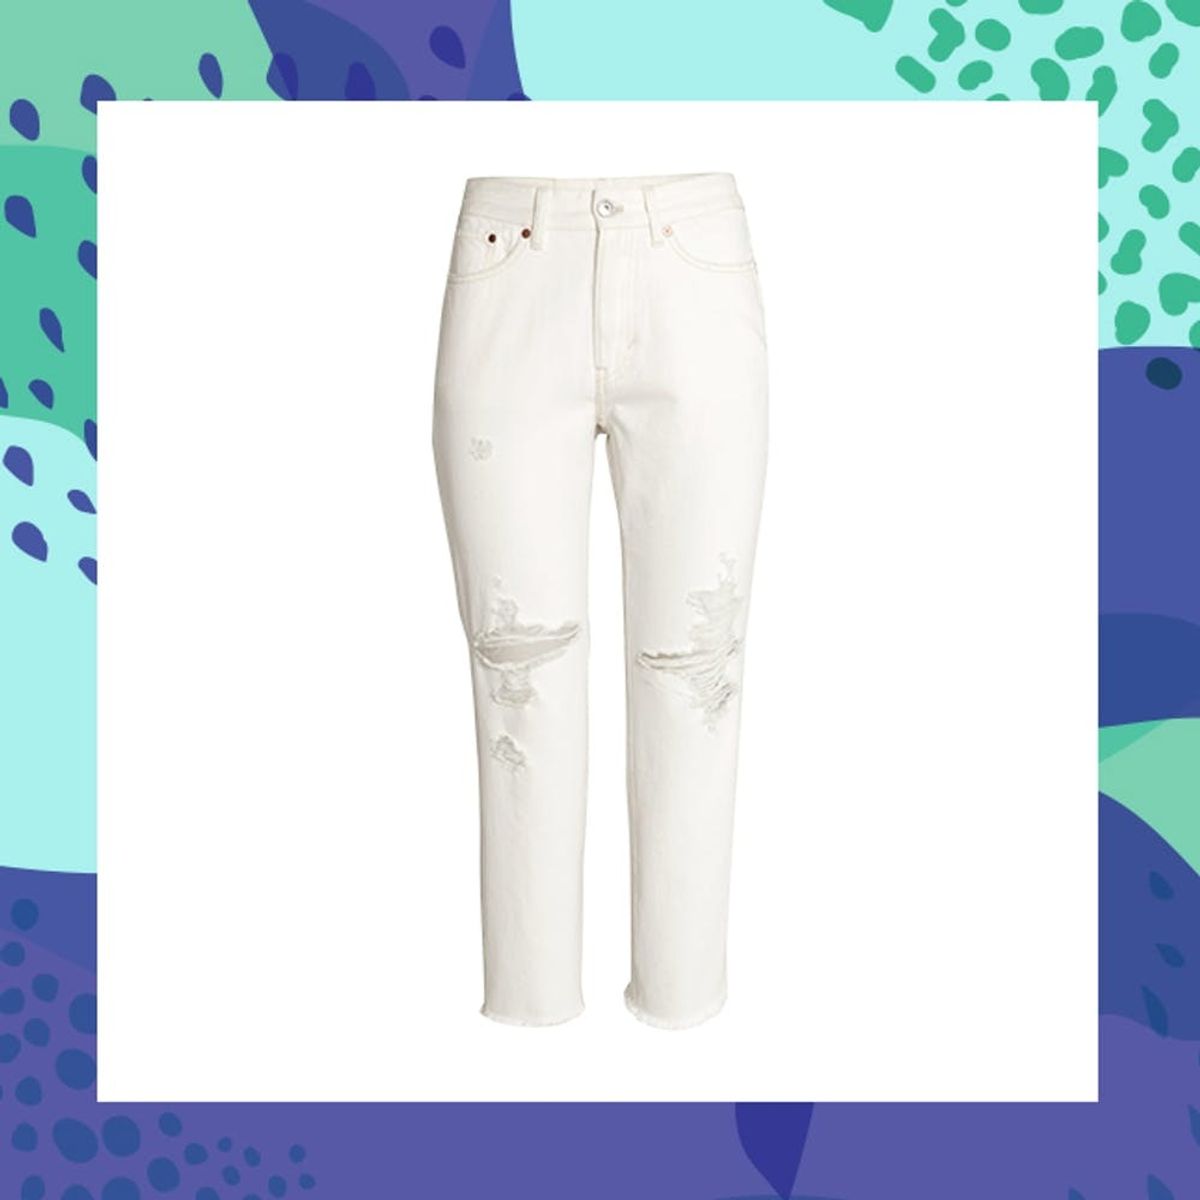 3 Ways to Slay White Jeans This Spring, According to Celebs